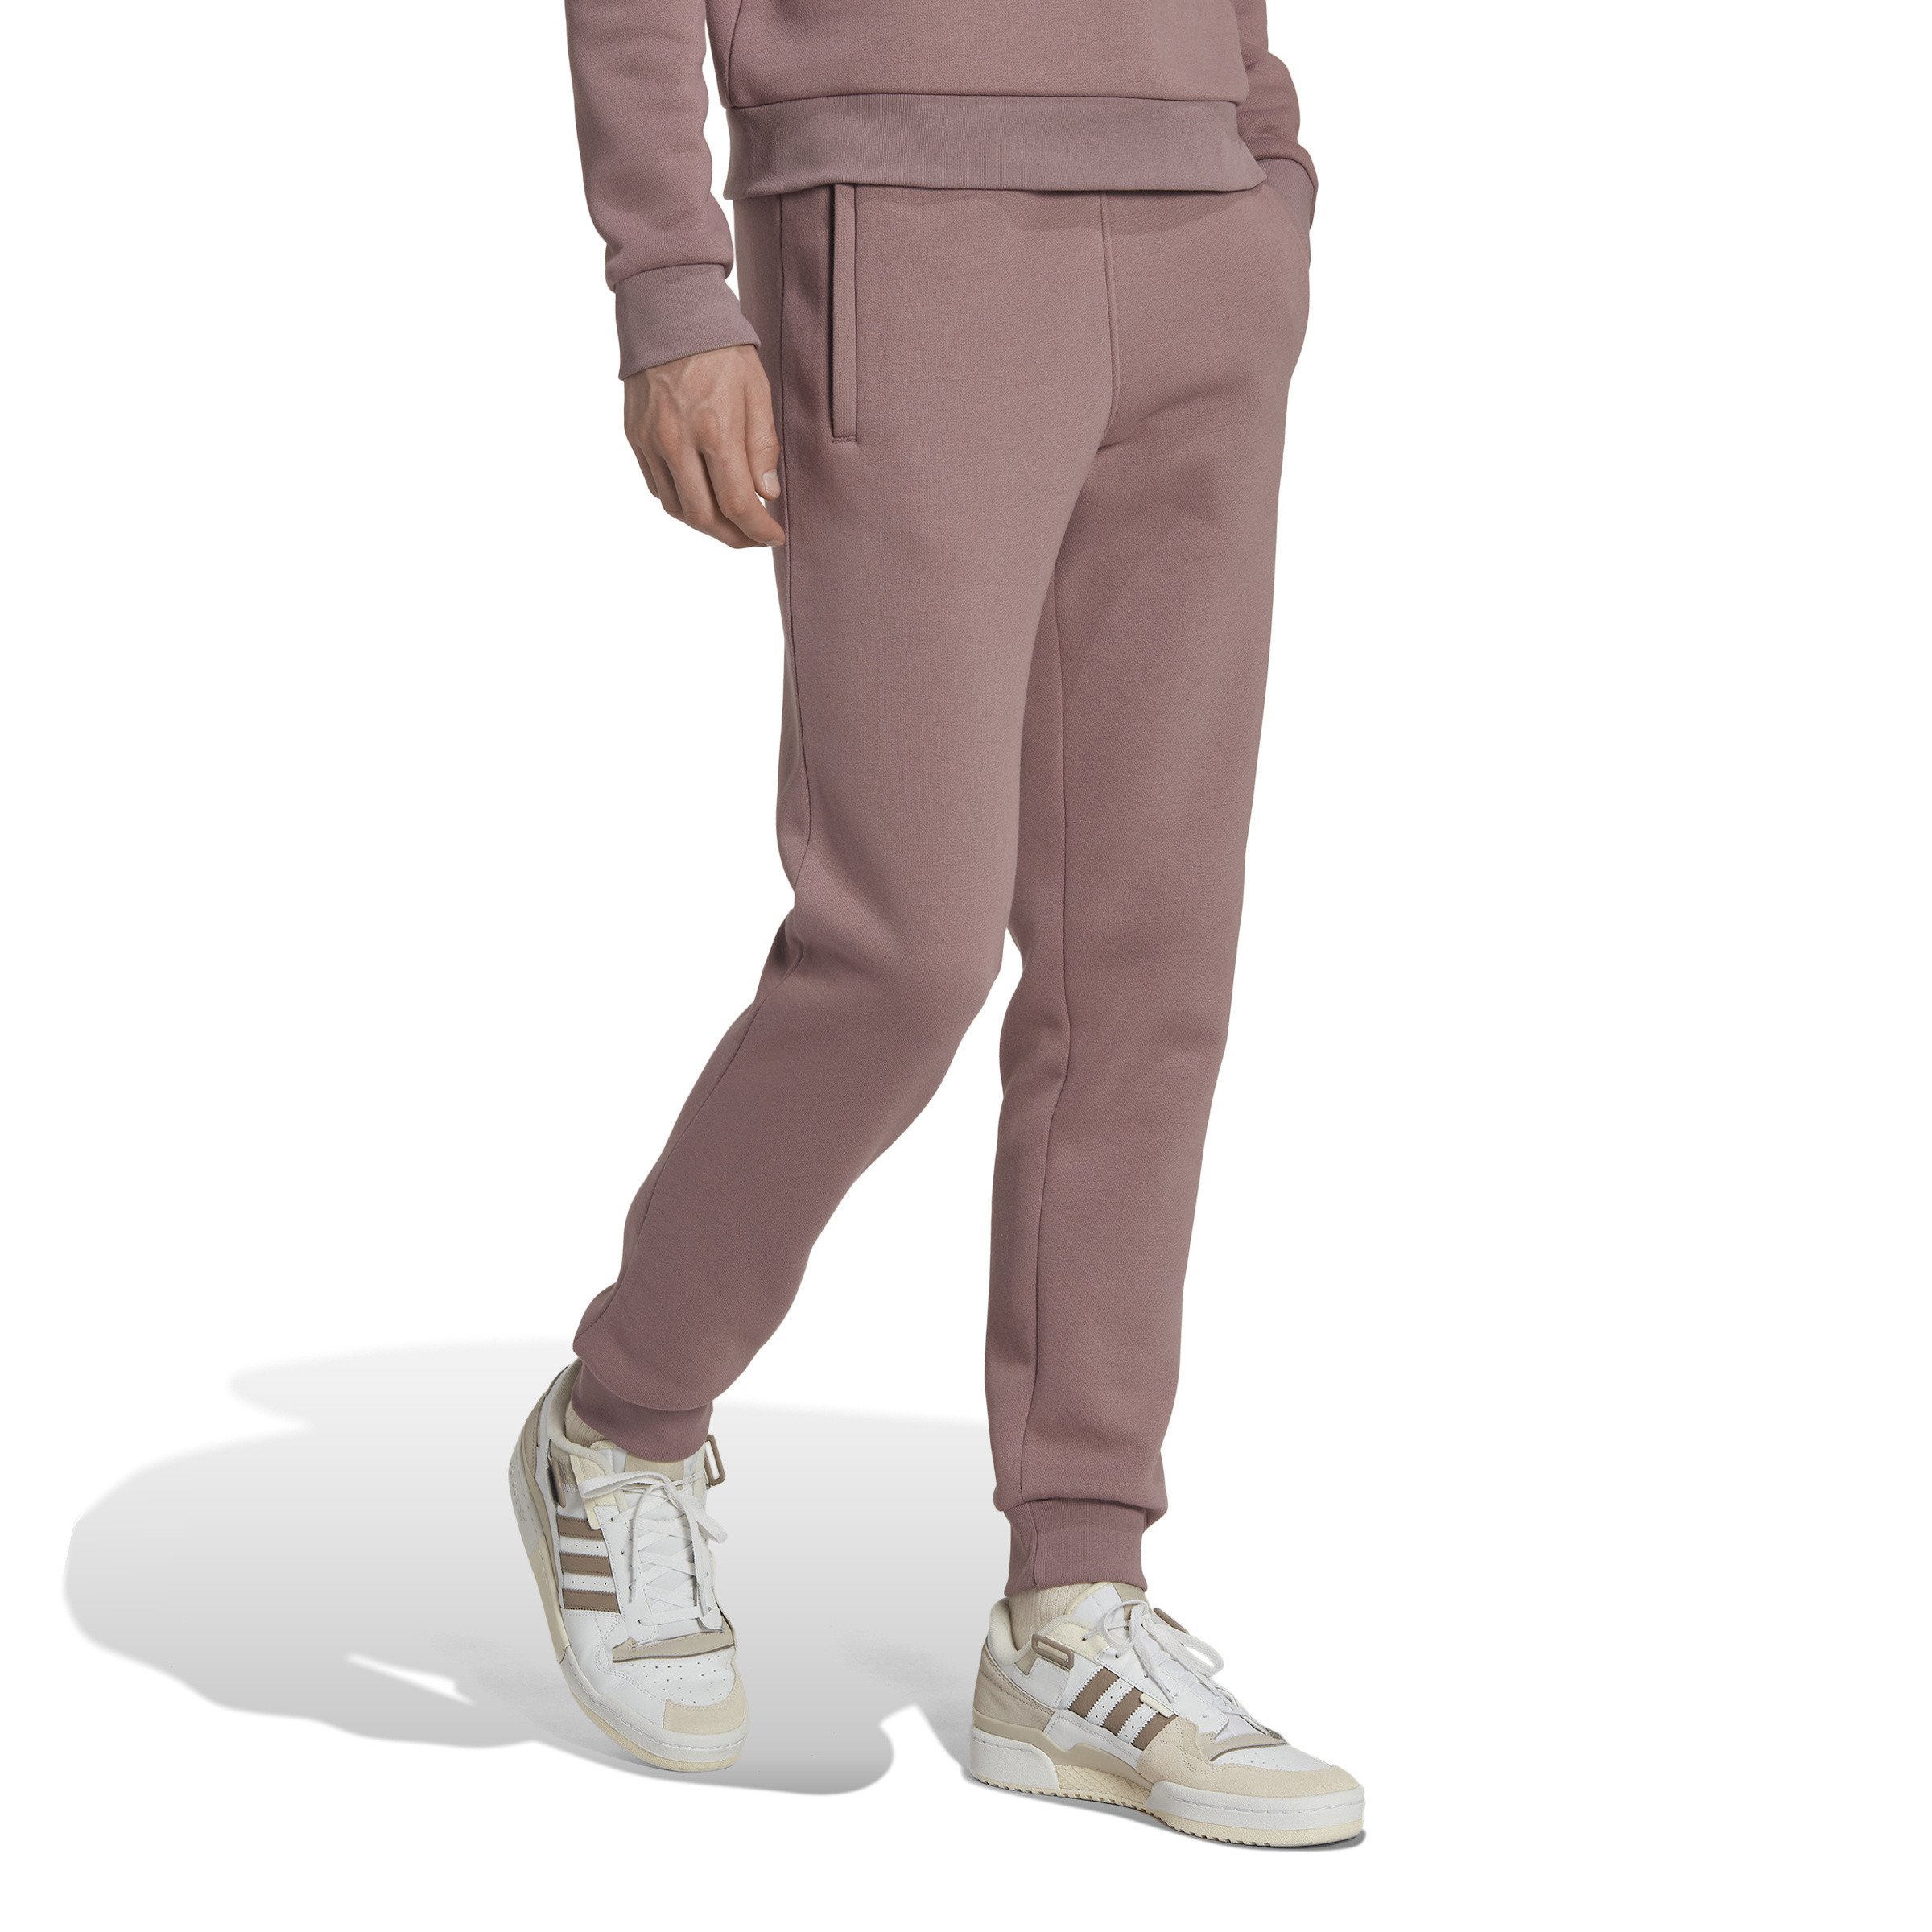 Adidas - Pantaloni adicolor essentials trefoil, Rosa antico, large image number 2